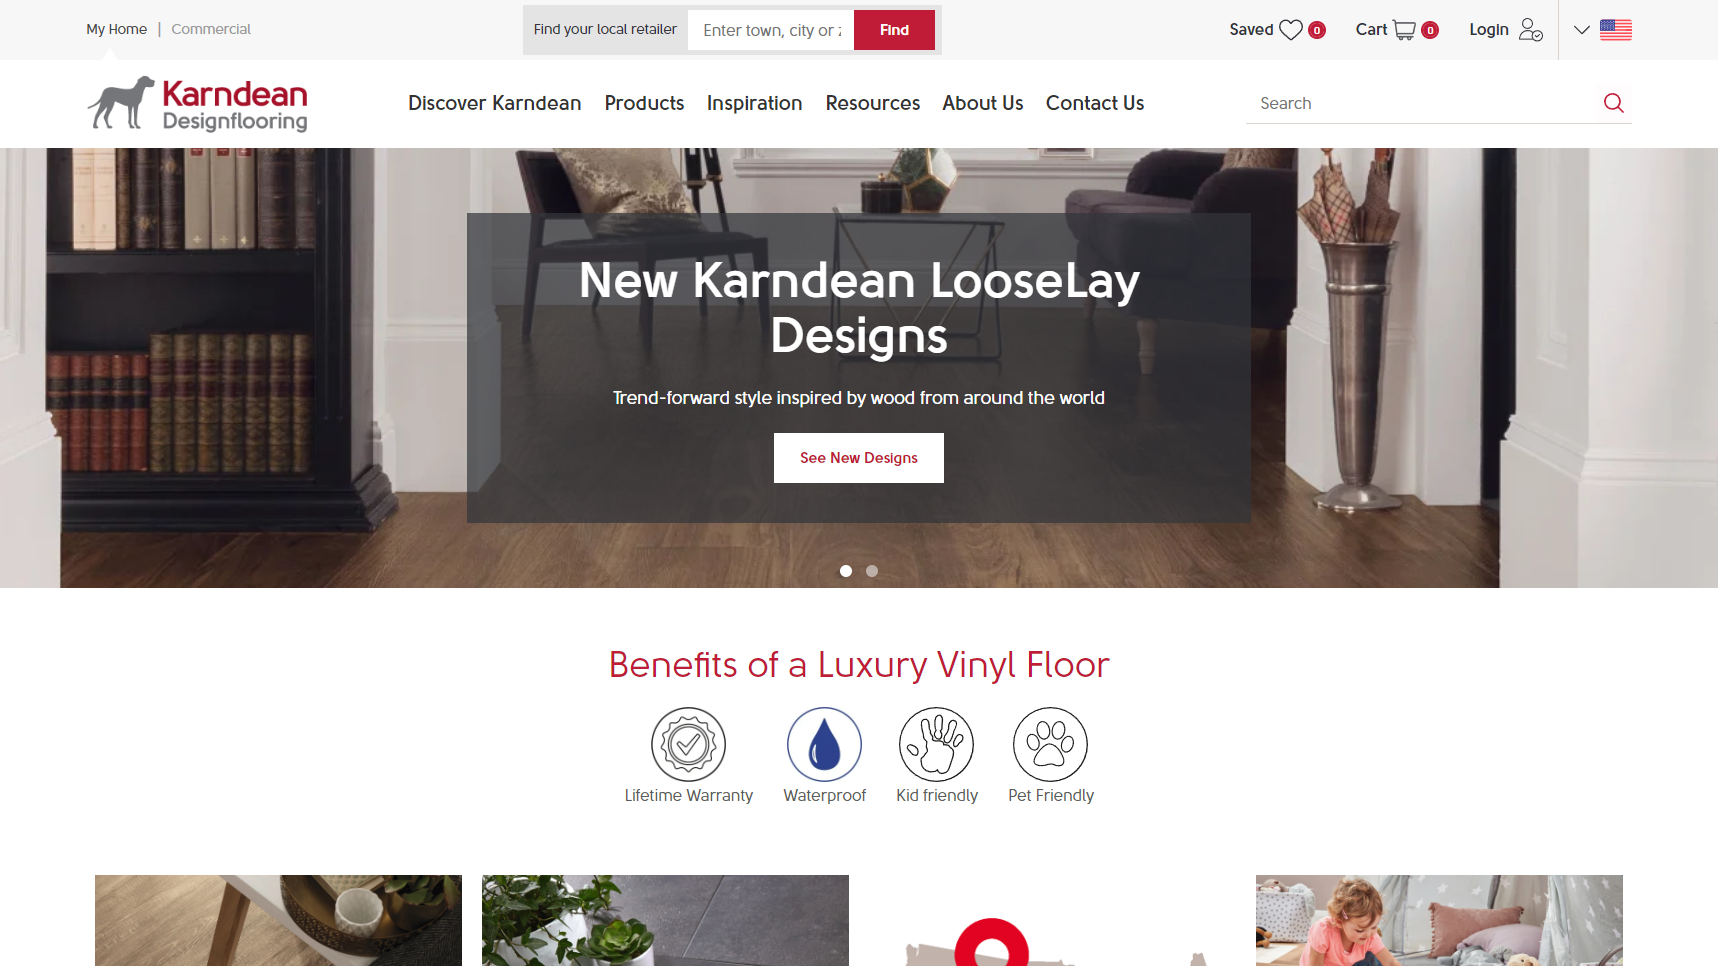 Karndean Designflooring - Lifeproof Flooring Manufacturer